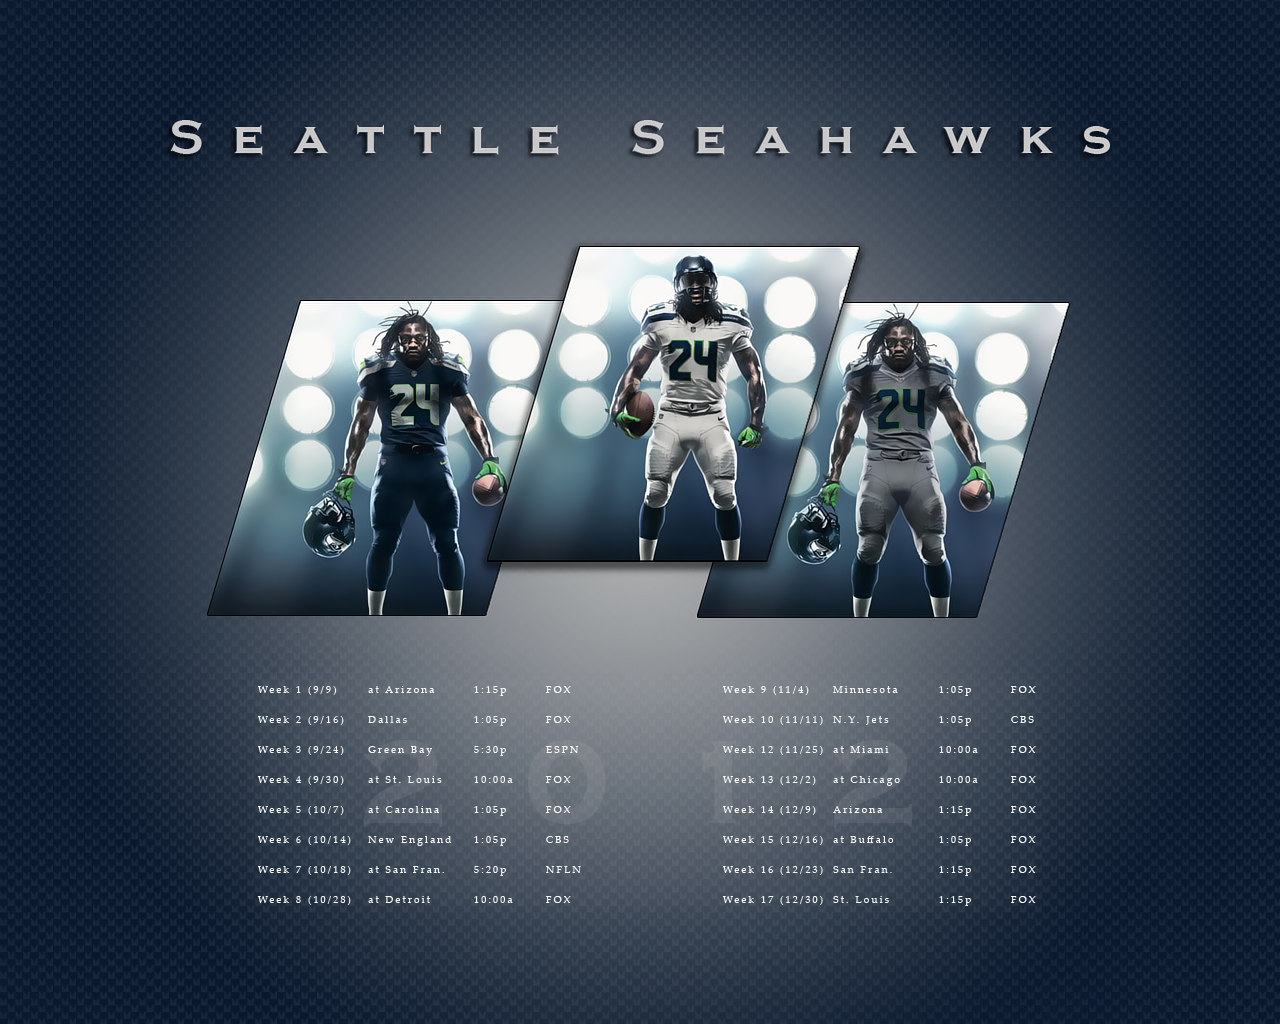 Seahawks 2012 Schedule by GoldenIsThySeahawk